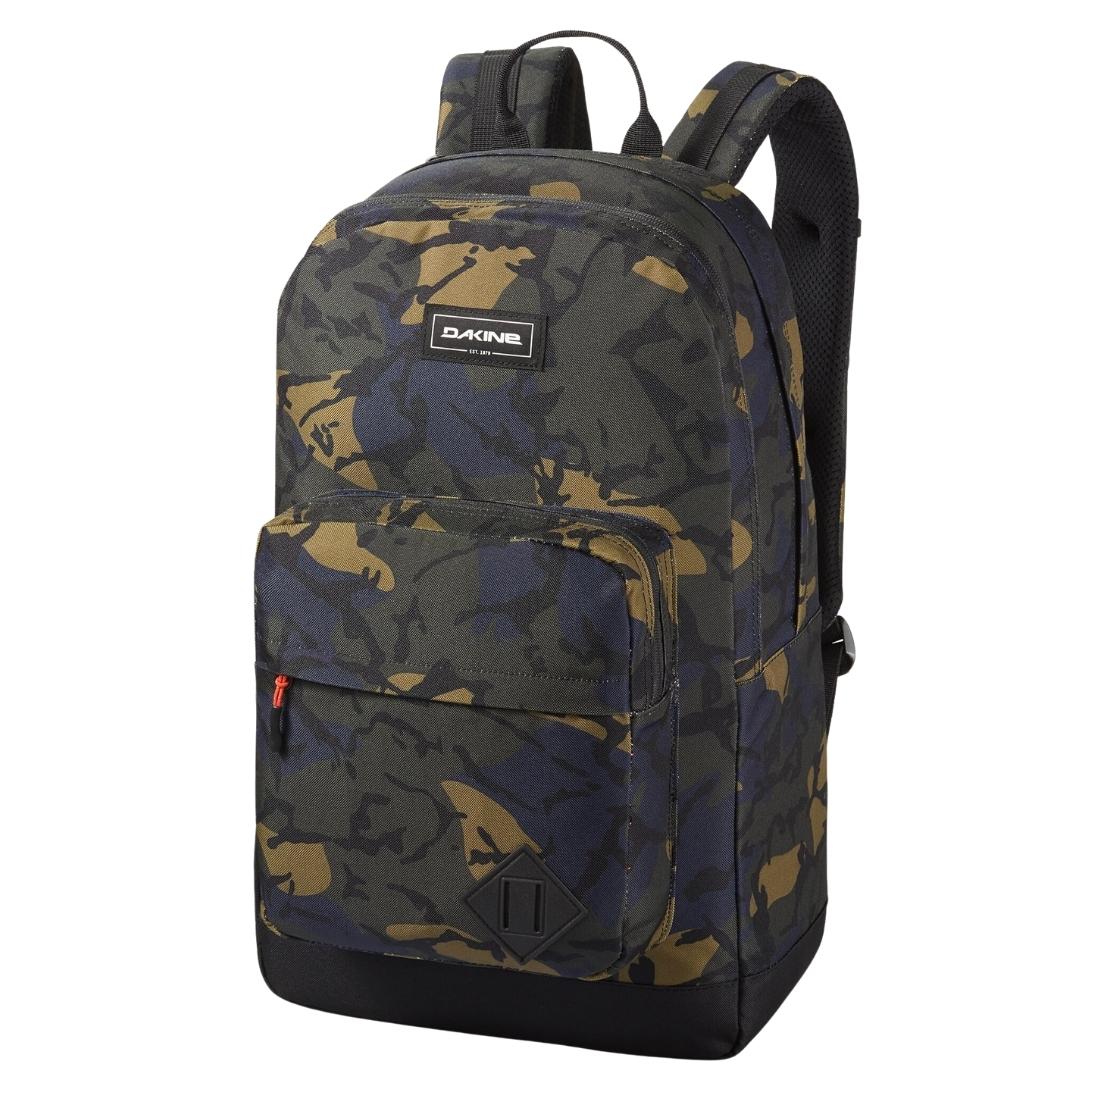 Dakine 365 Pack DLX 27L Backpack - Cascade Camo - Backpack by Dakine 27L